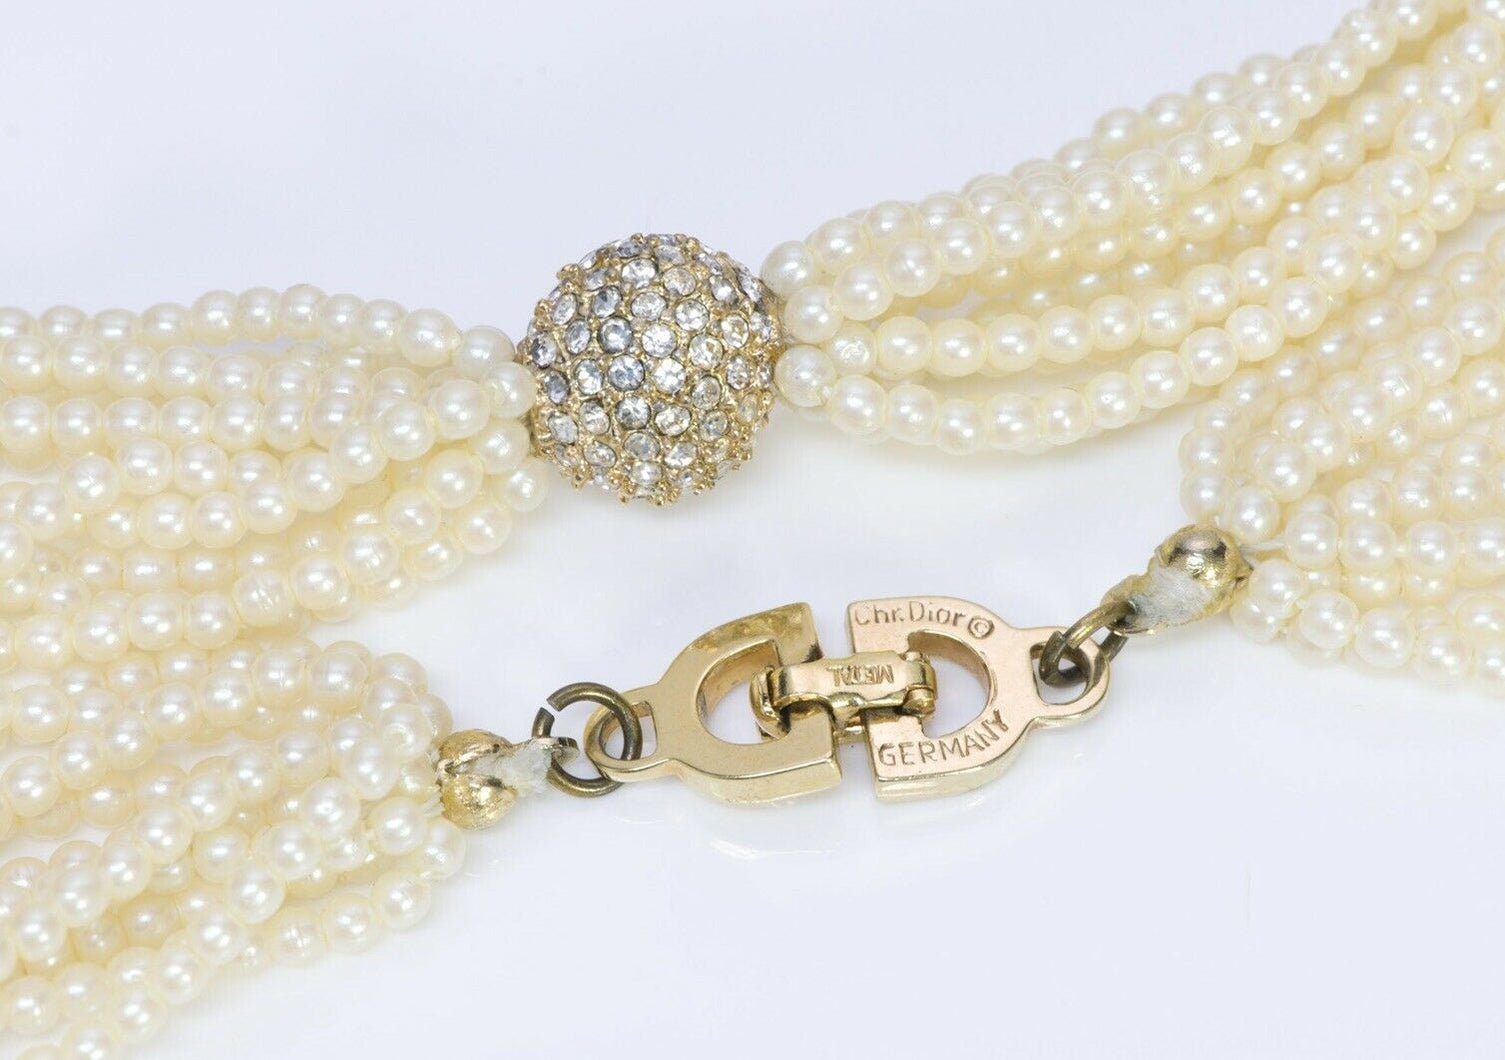 Christian Dior Henkel & Grosse 1950’s Pearl Crystal Necklace